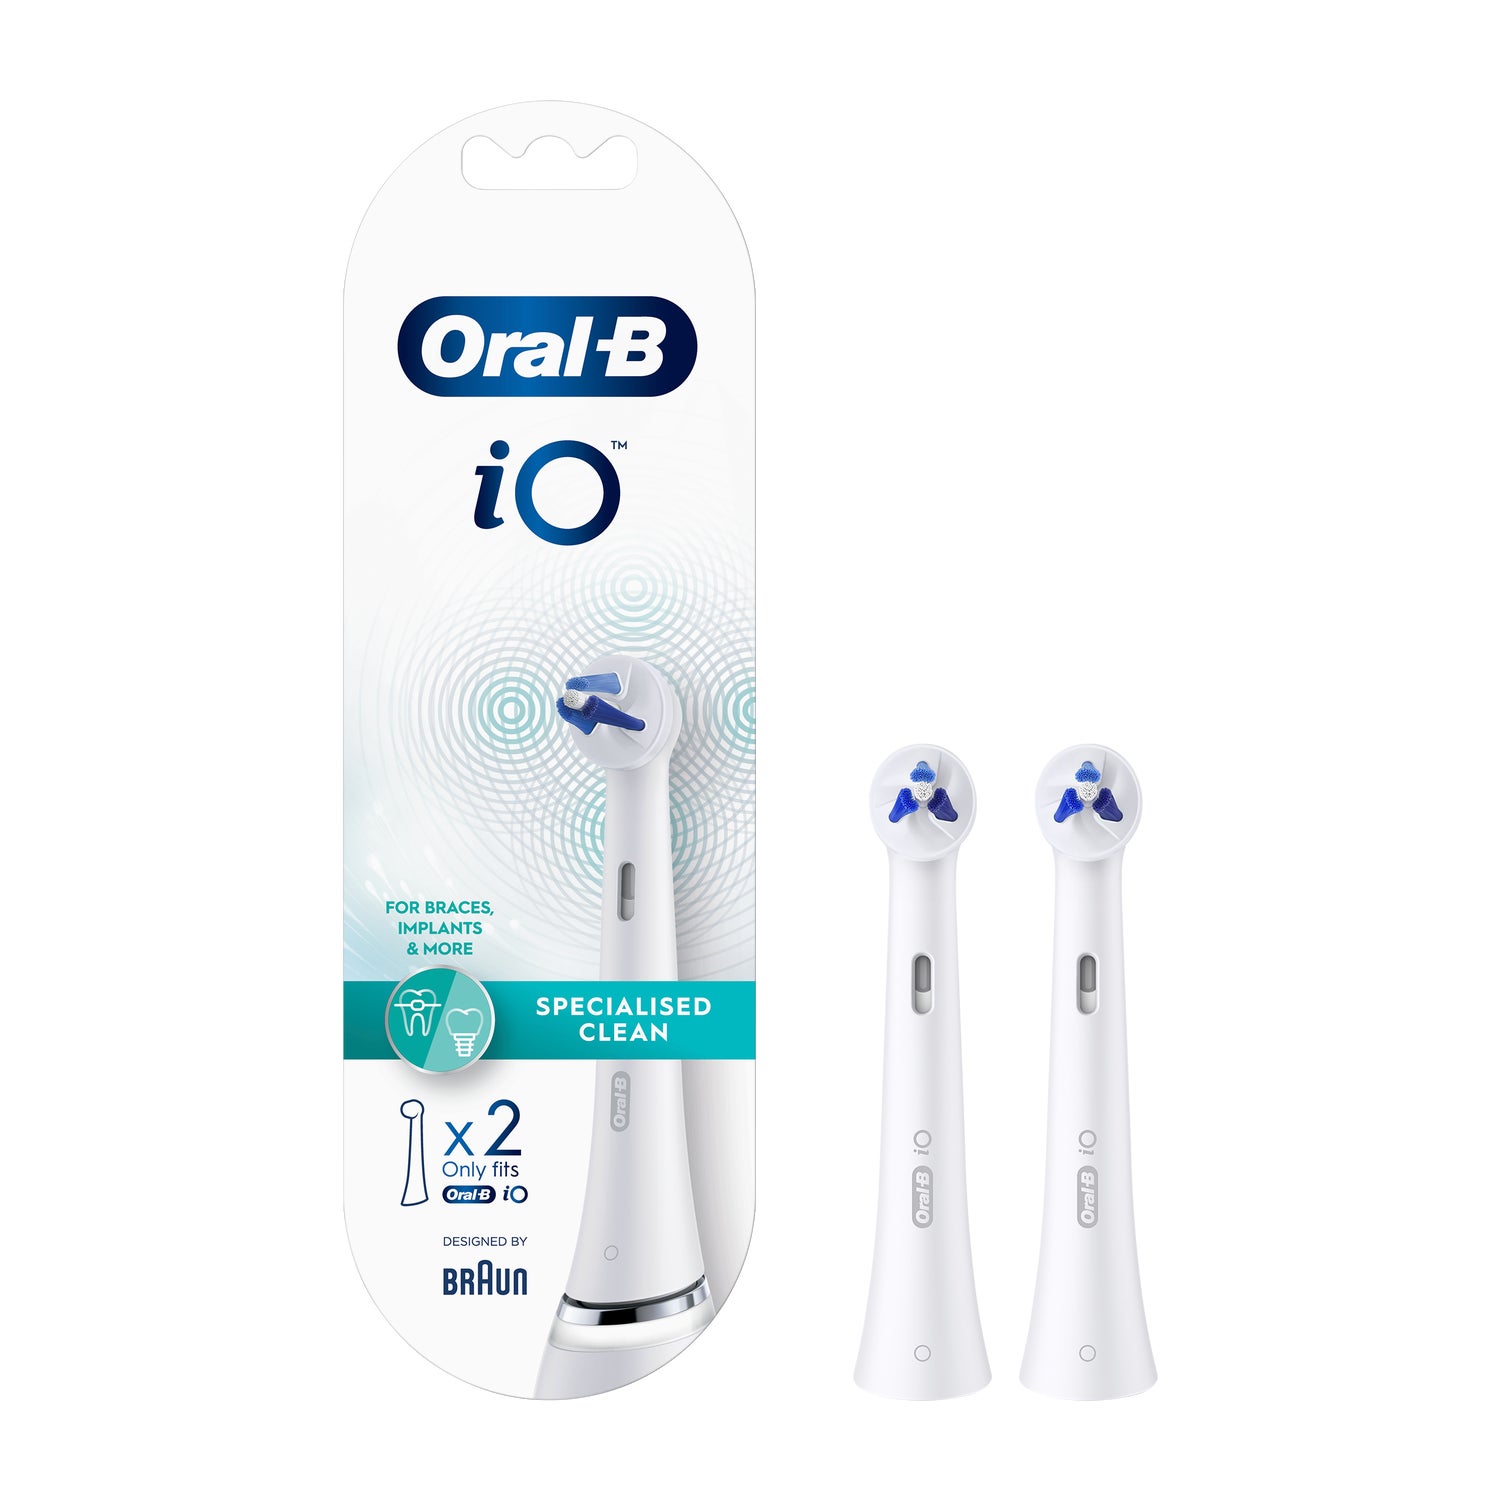 Oral-B Pro Sensitive Clean recambio para cepillo eléctrico 3 recambios